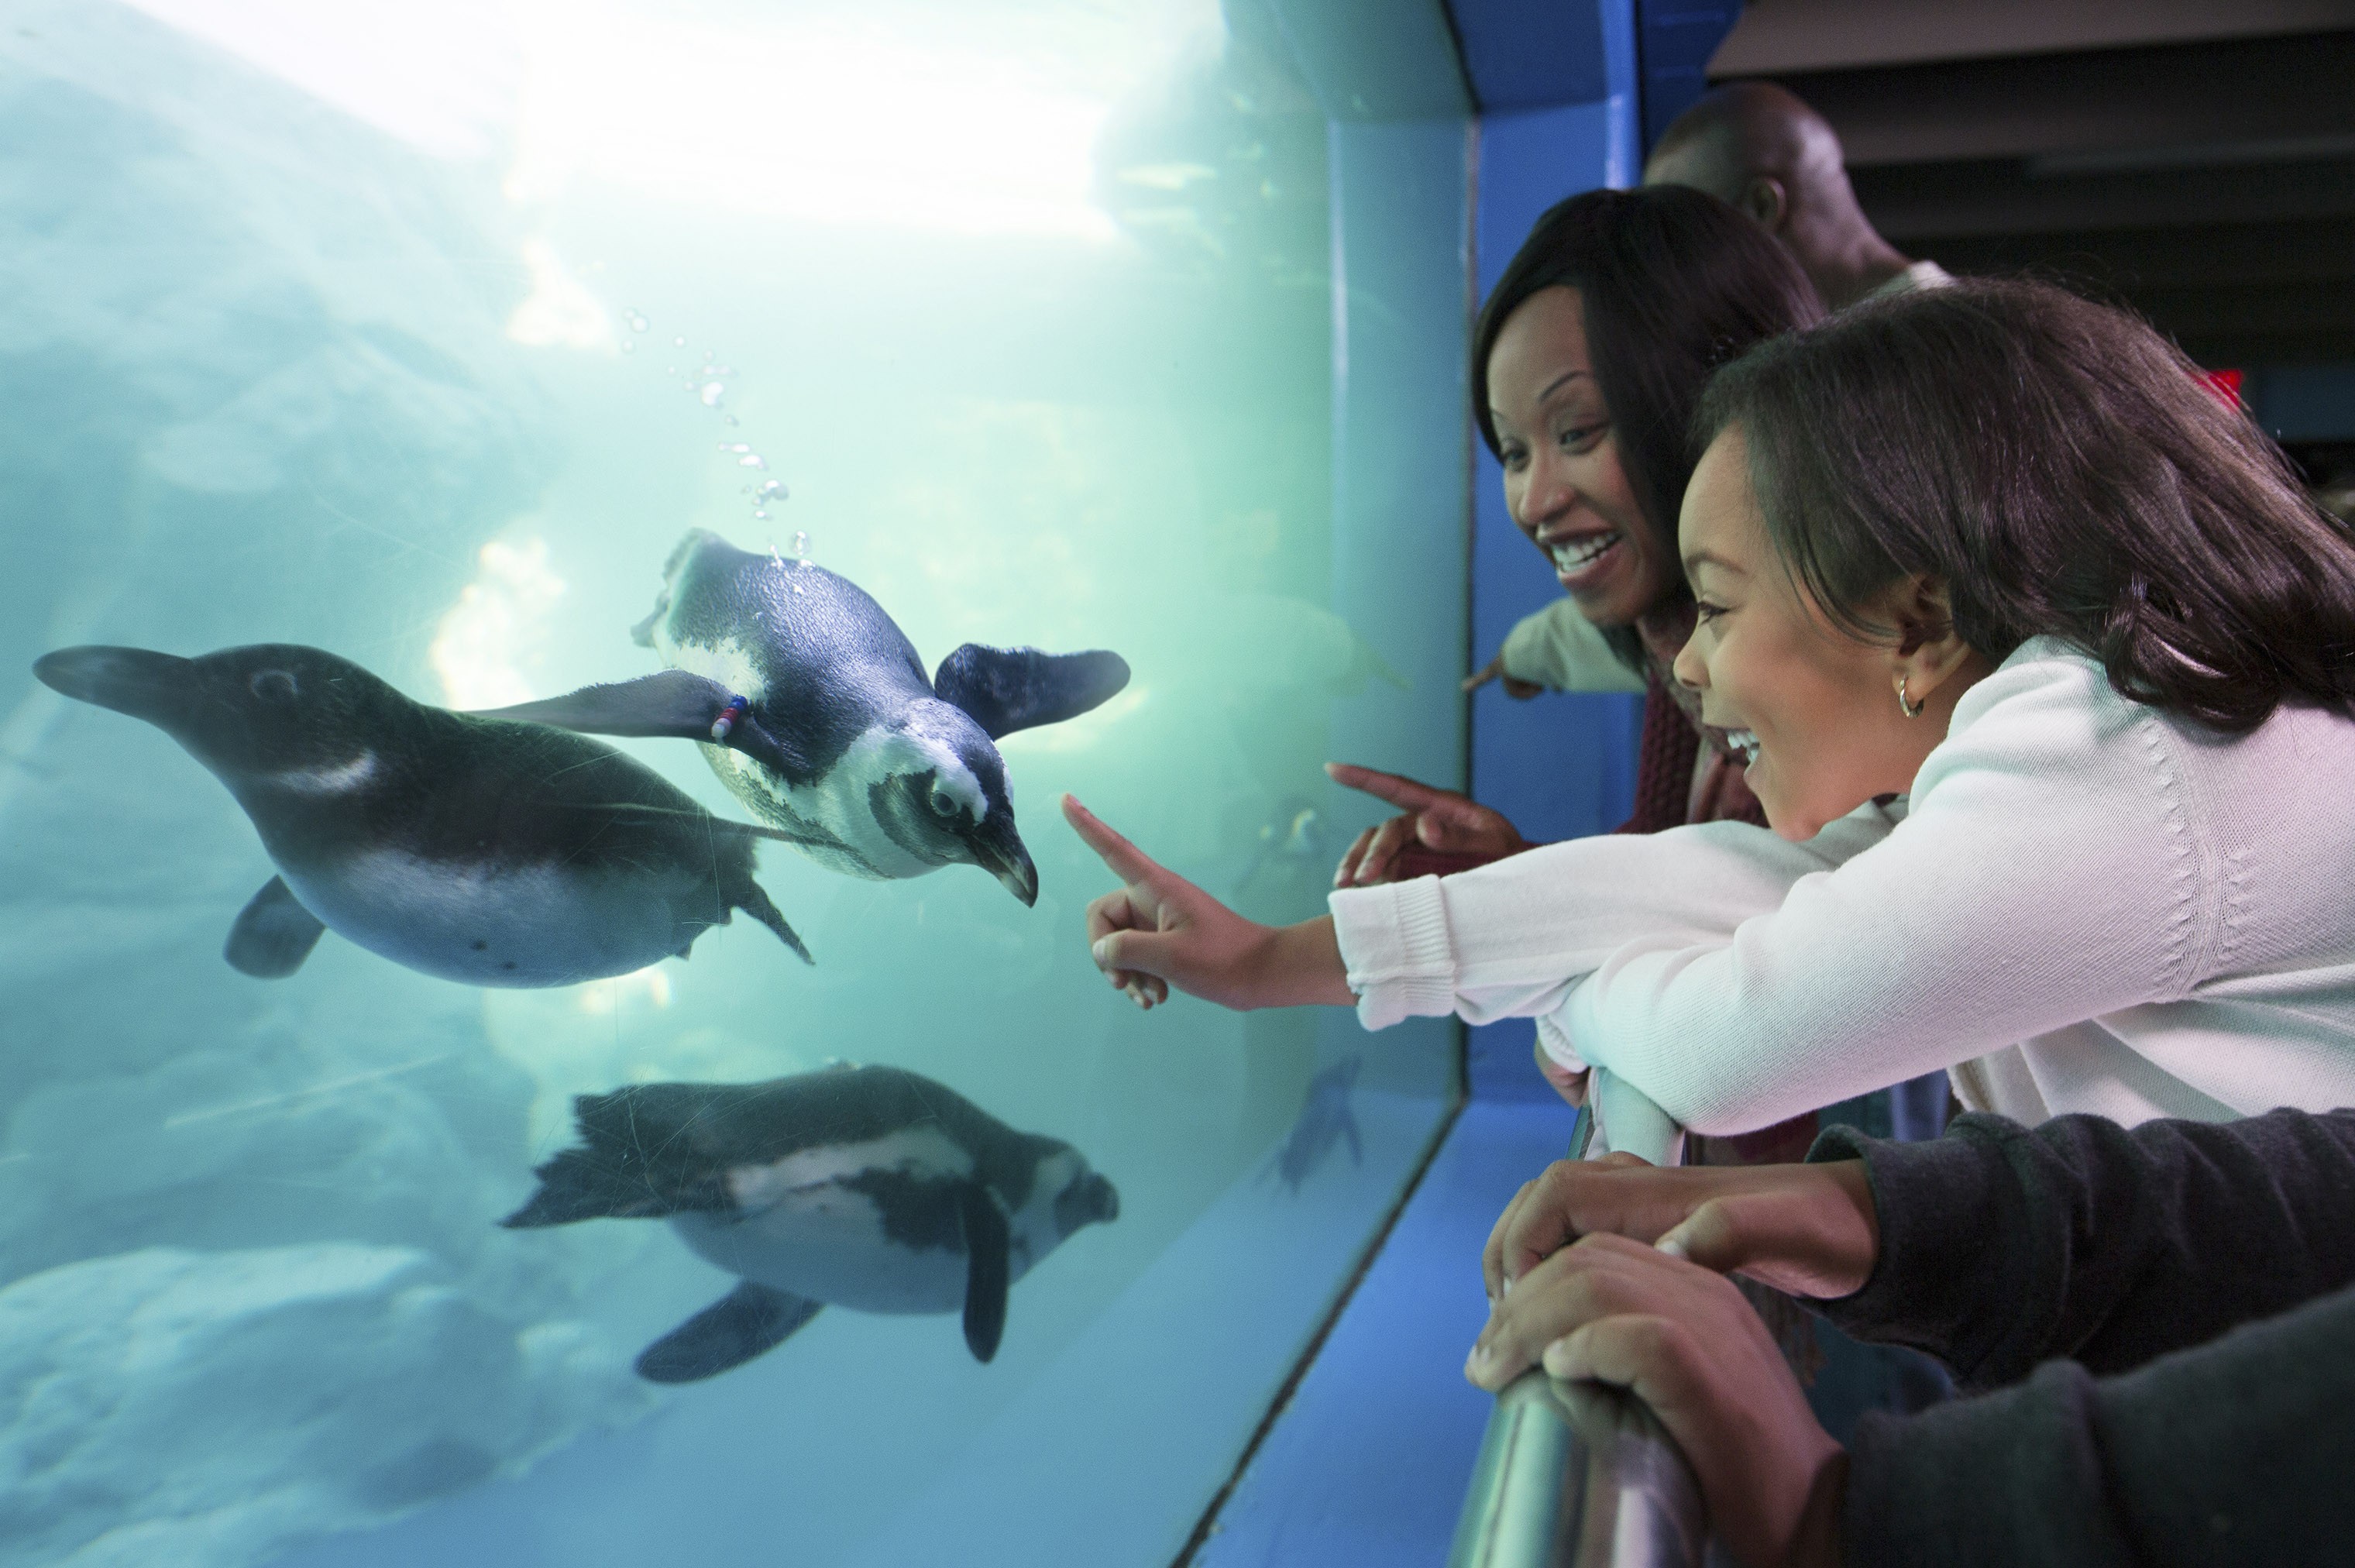 Visitors can meet wildlife up close at the national- award-winning Mystic Aquarium.